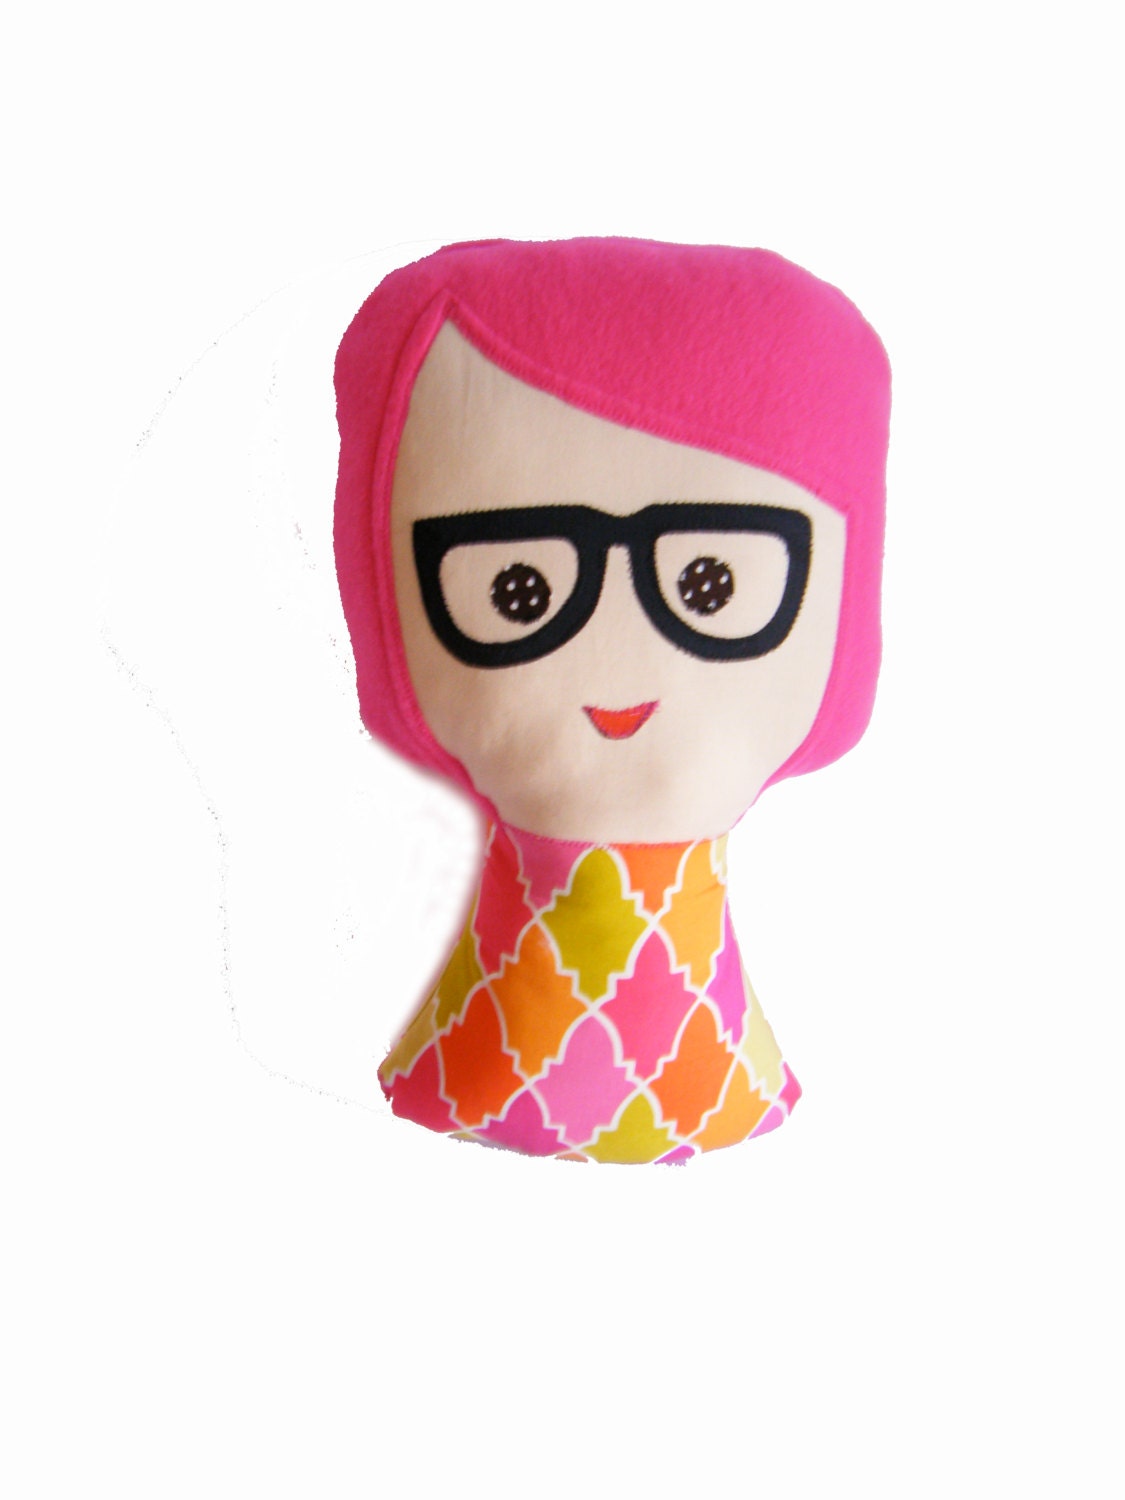 Plush Doll - Soft stuffed toy or cushion - "Nerdy Nadine" - orange pink - retro doll - QuiltedBlissByNadine